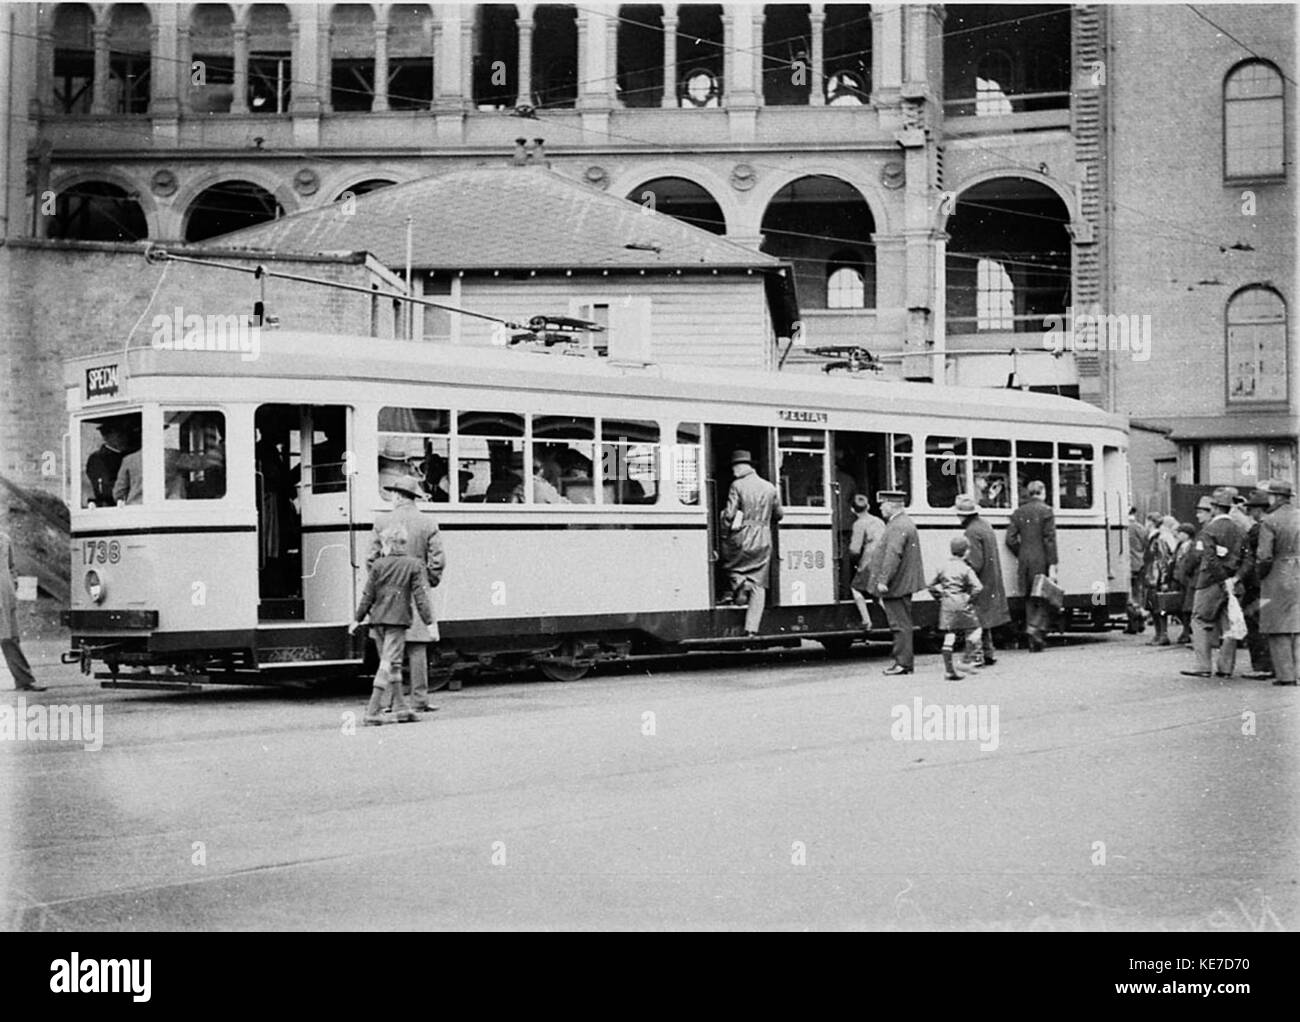 51773 Sydney tram n. 1738 ultimo modello Foto Stock